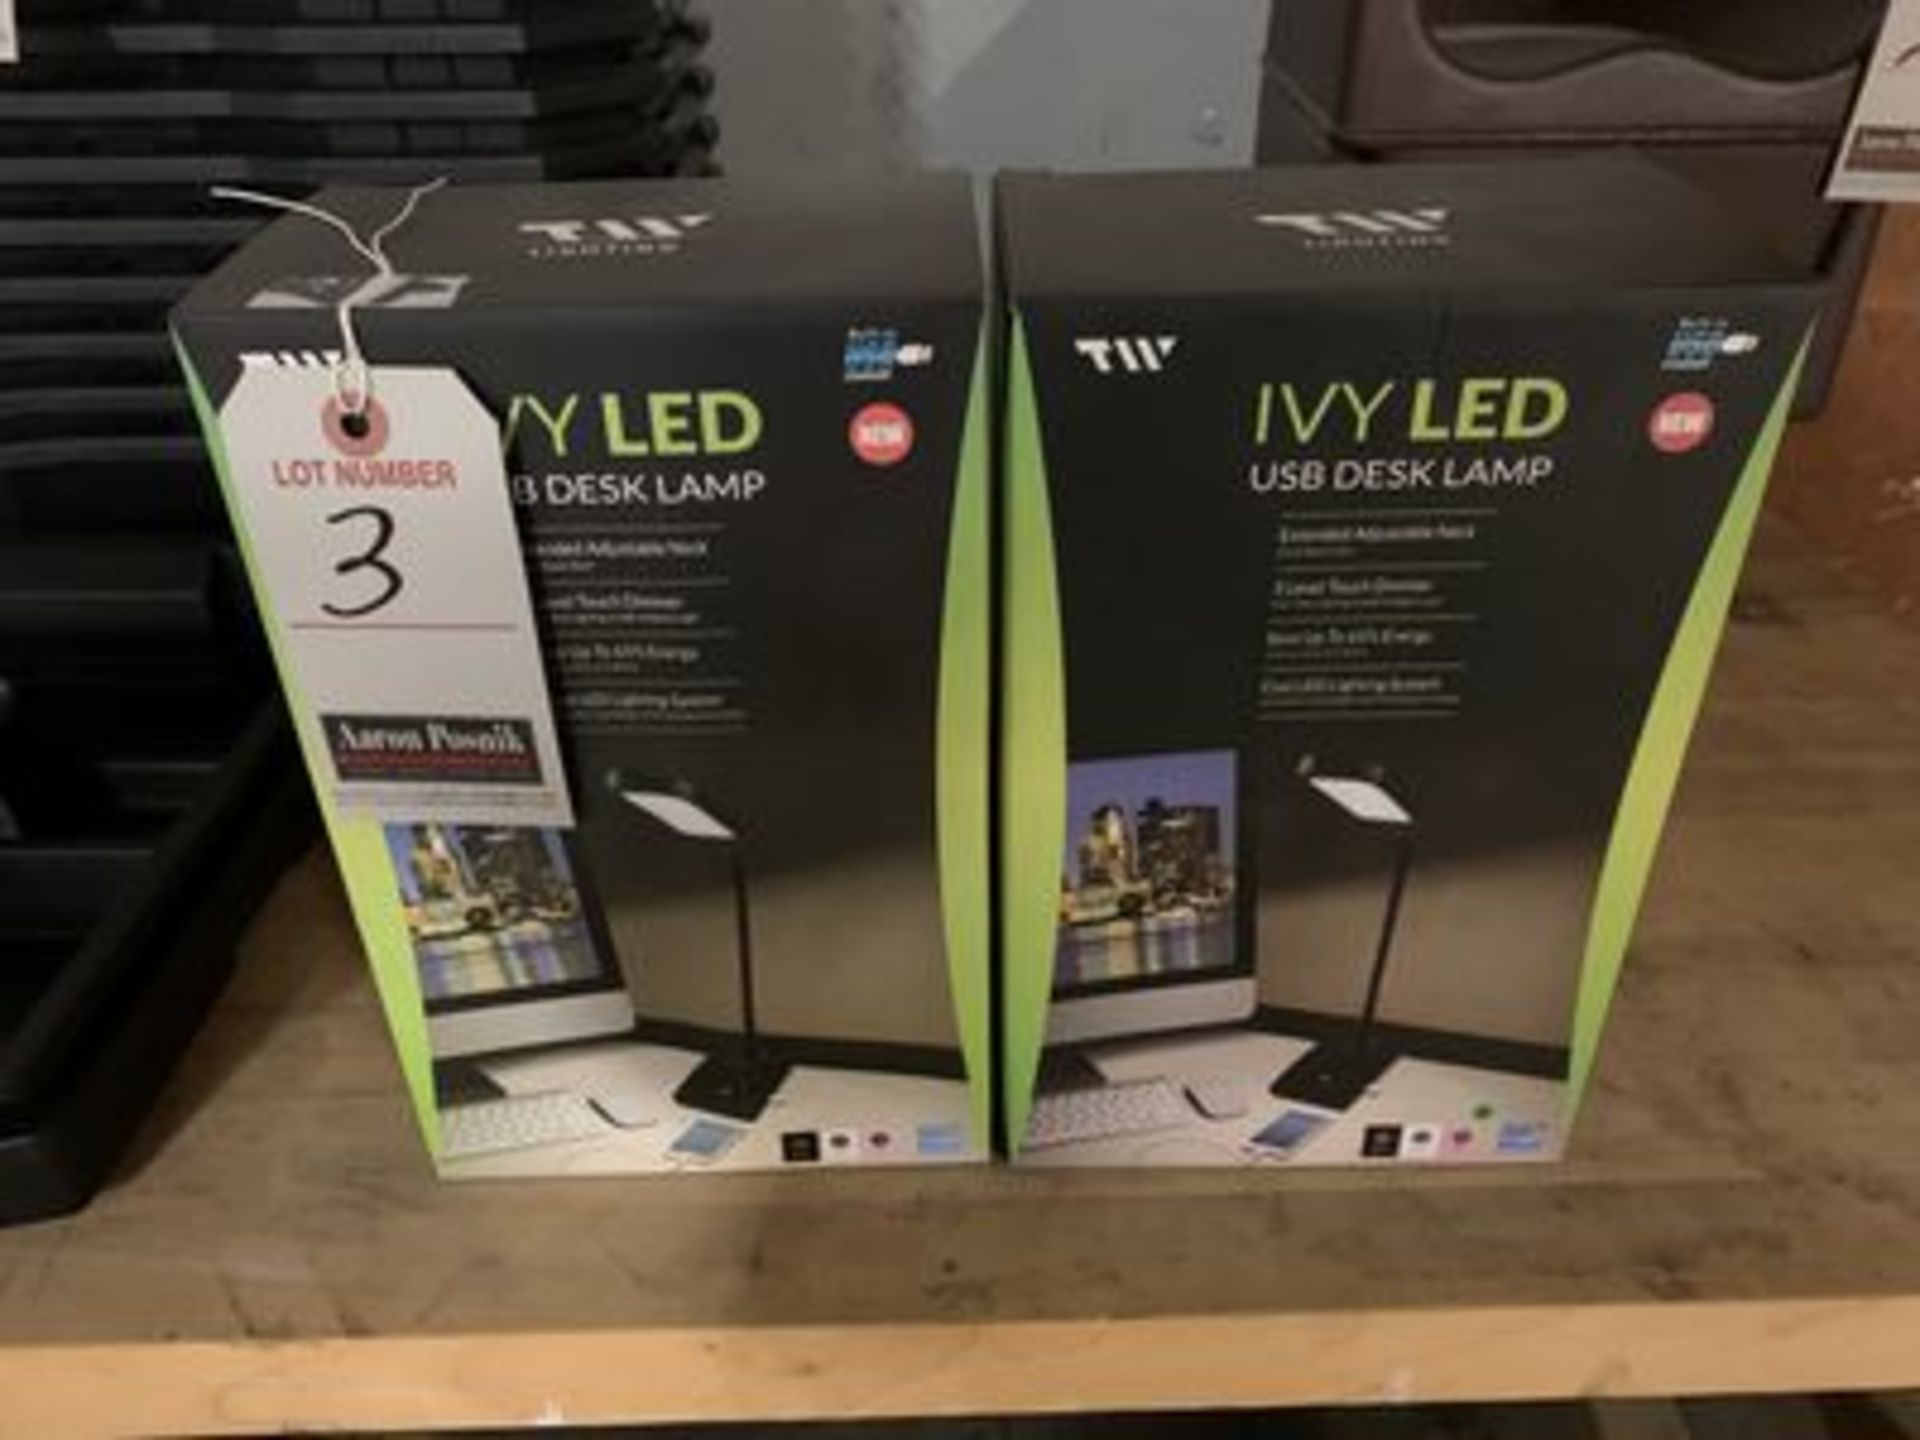 TW IVY LED USB DESK LAMPS